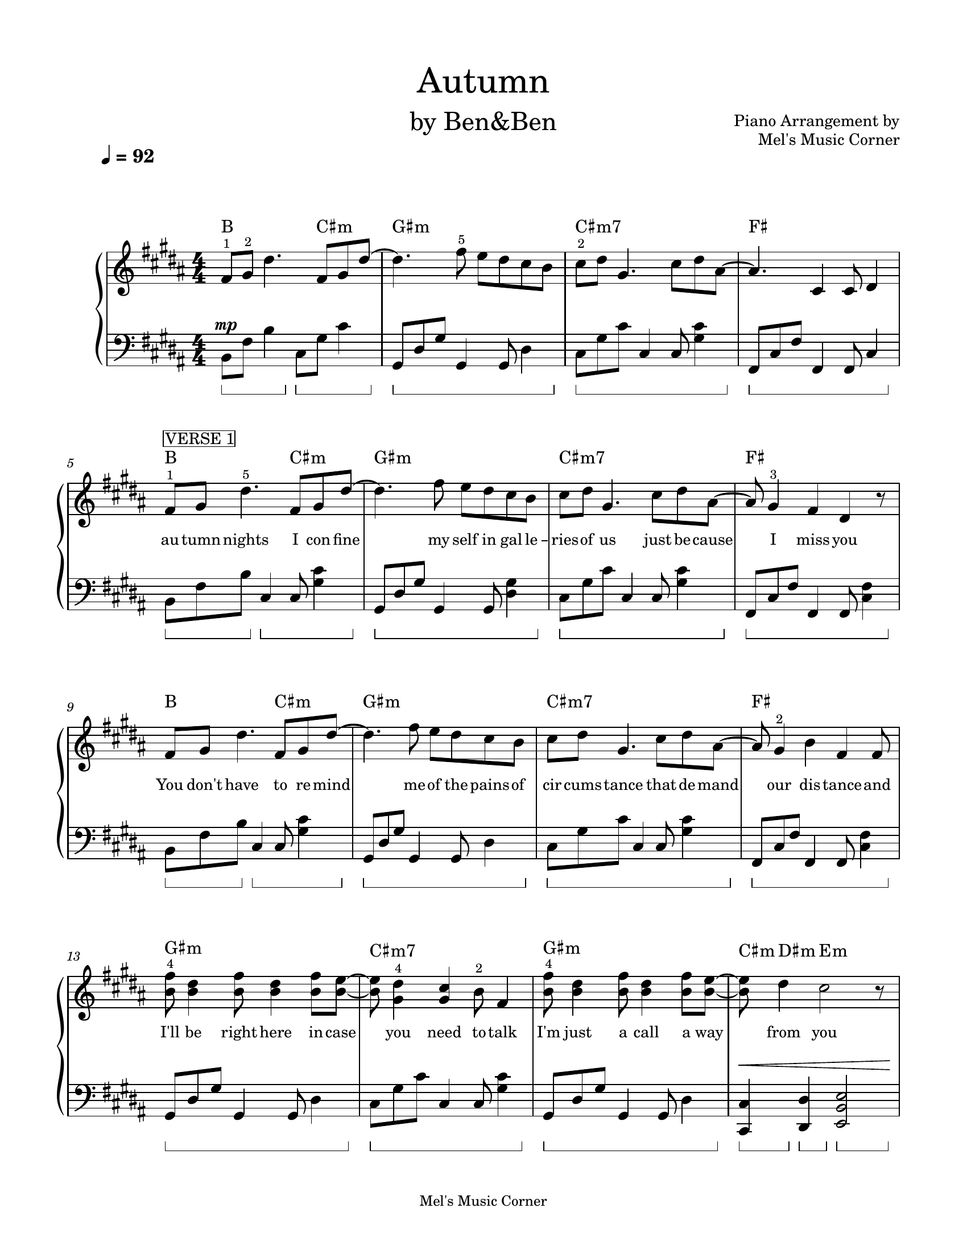 Ben&Ben - Autumn (piano sheet music) by Mel's Music Corner